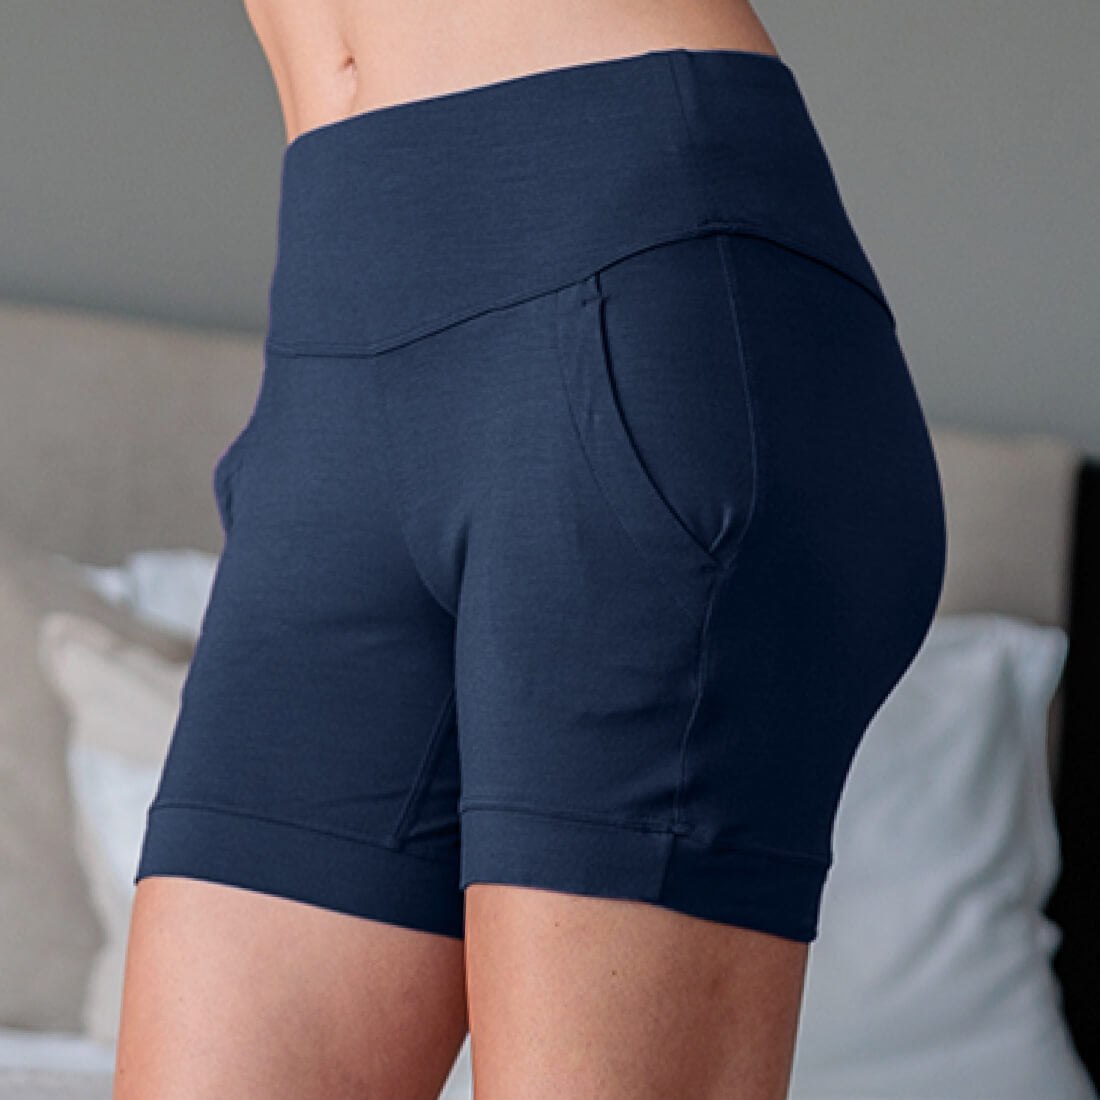 Balance shorts women || Midnight blue